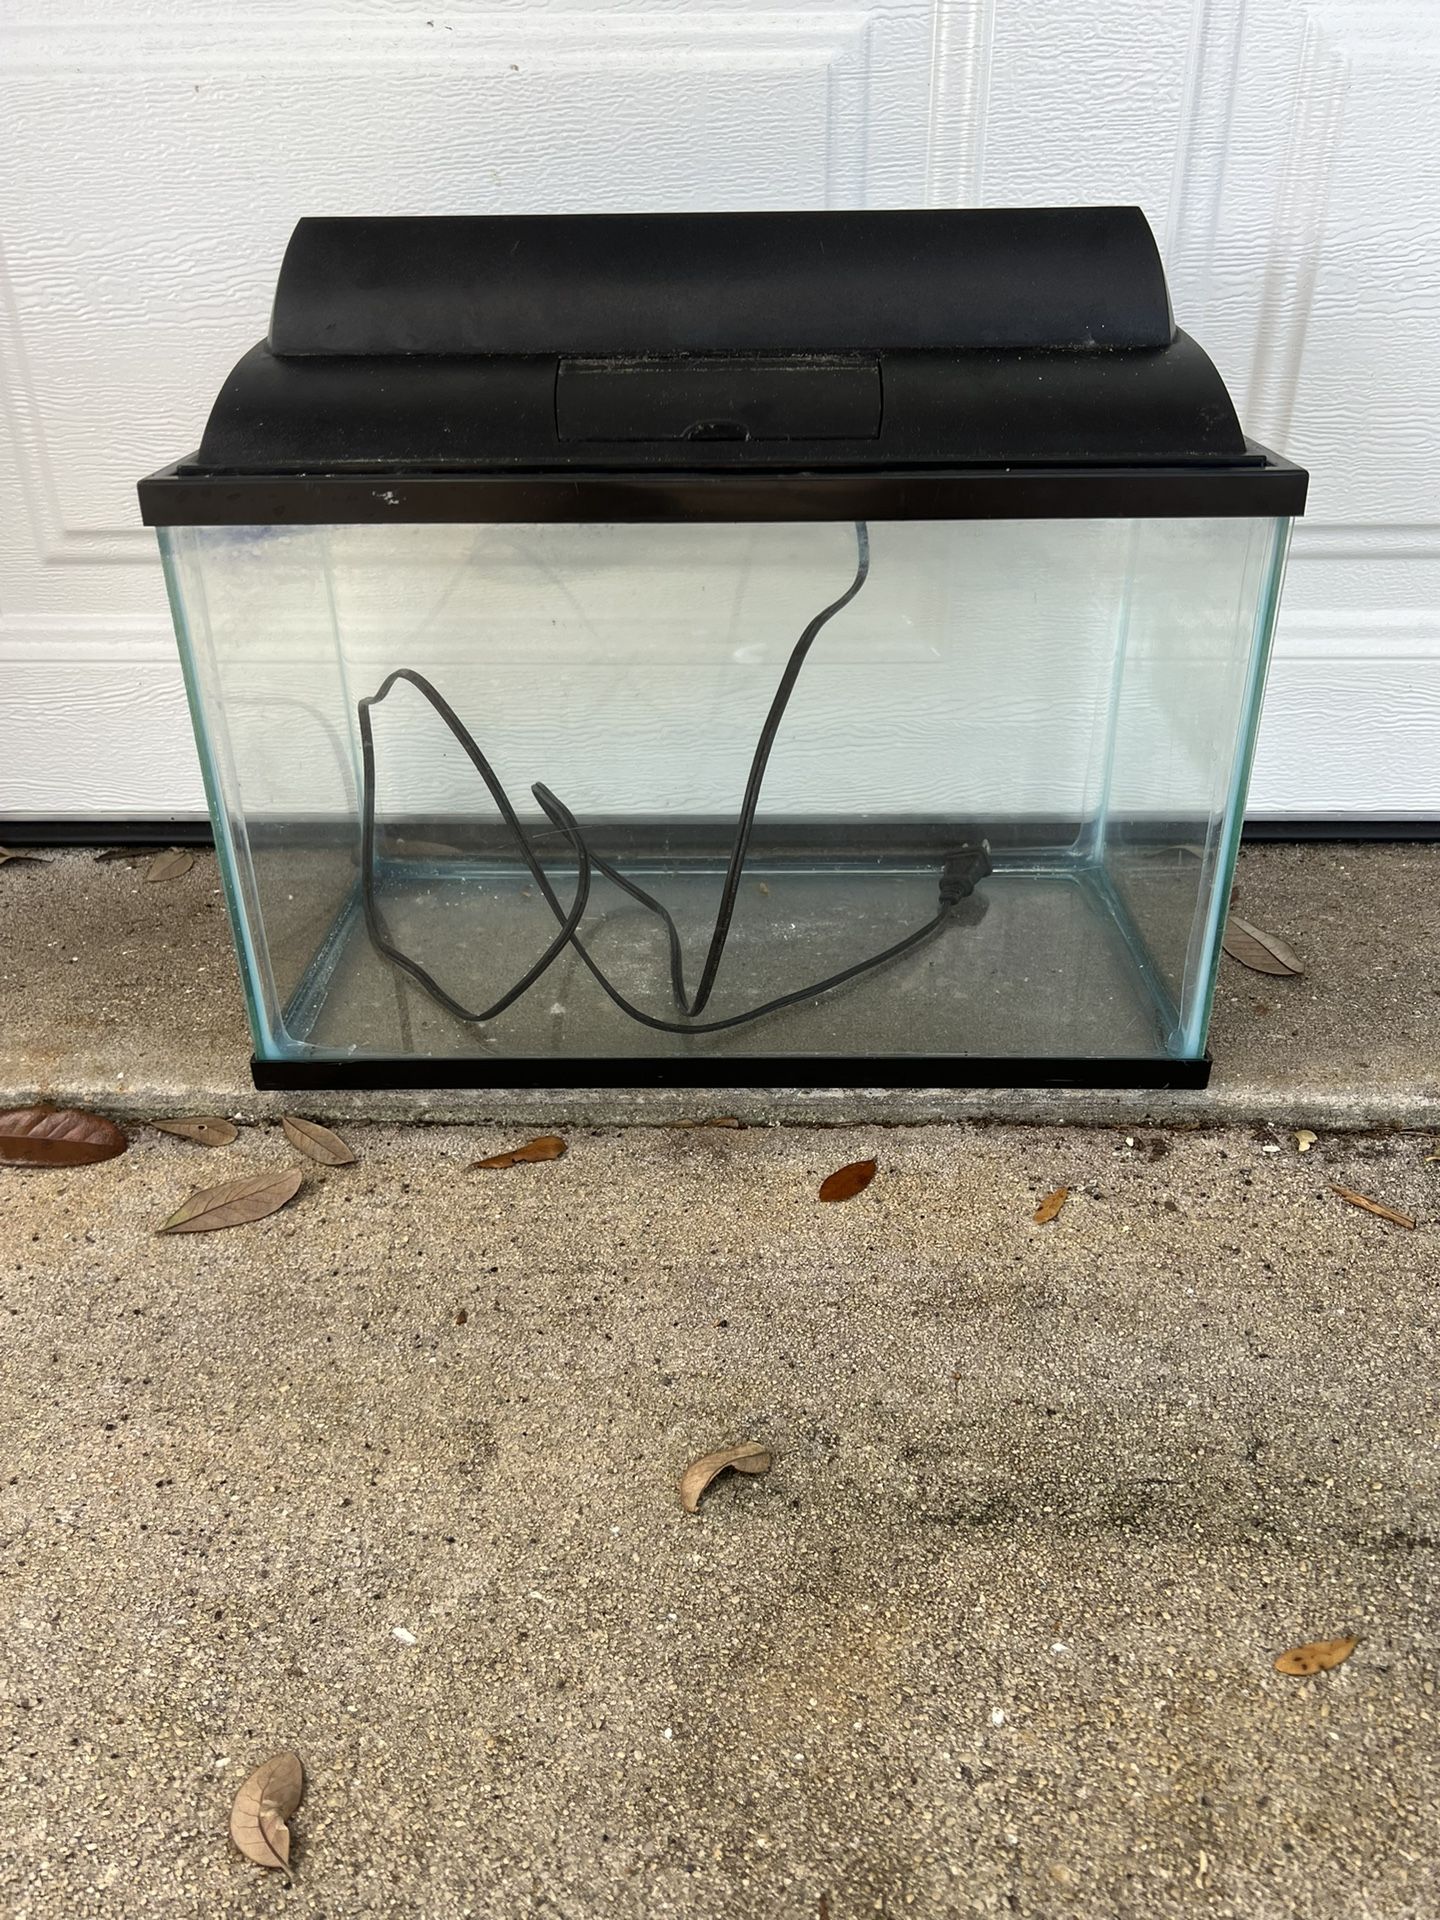 5 Gallon Aquarium Fish Tank With Light Hood 